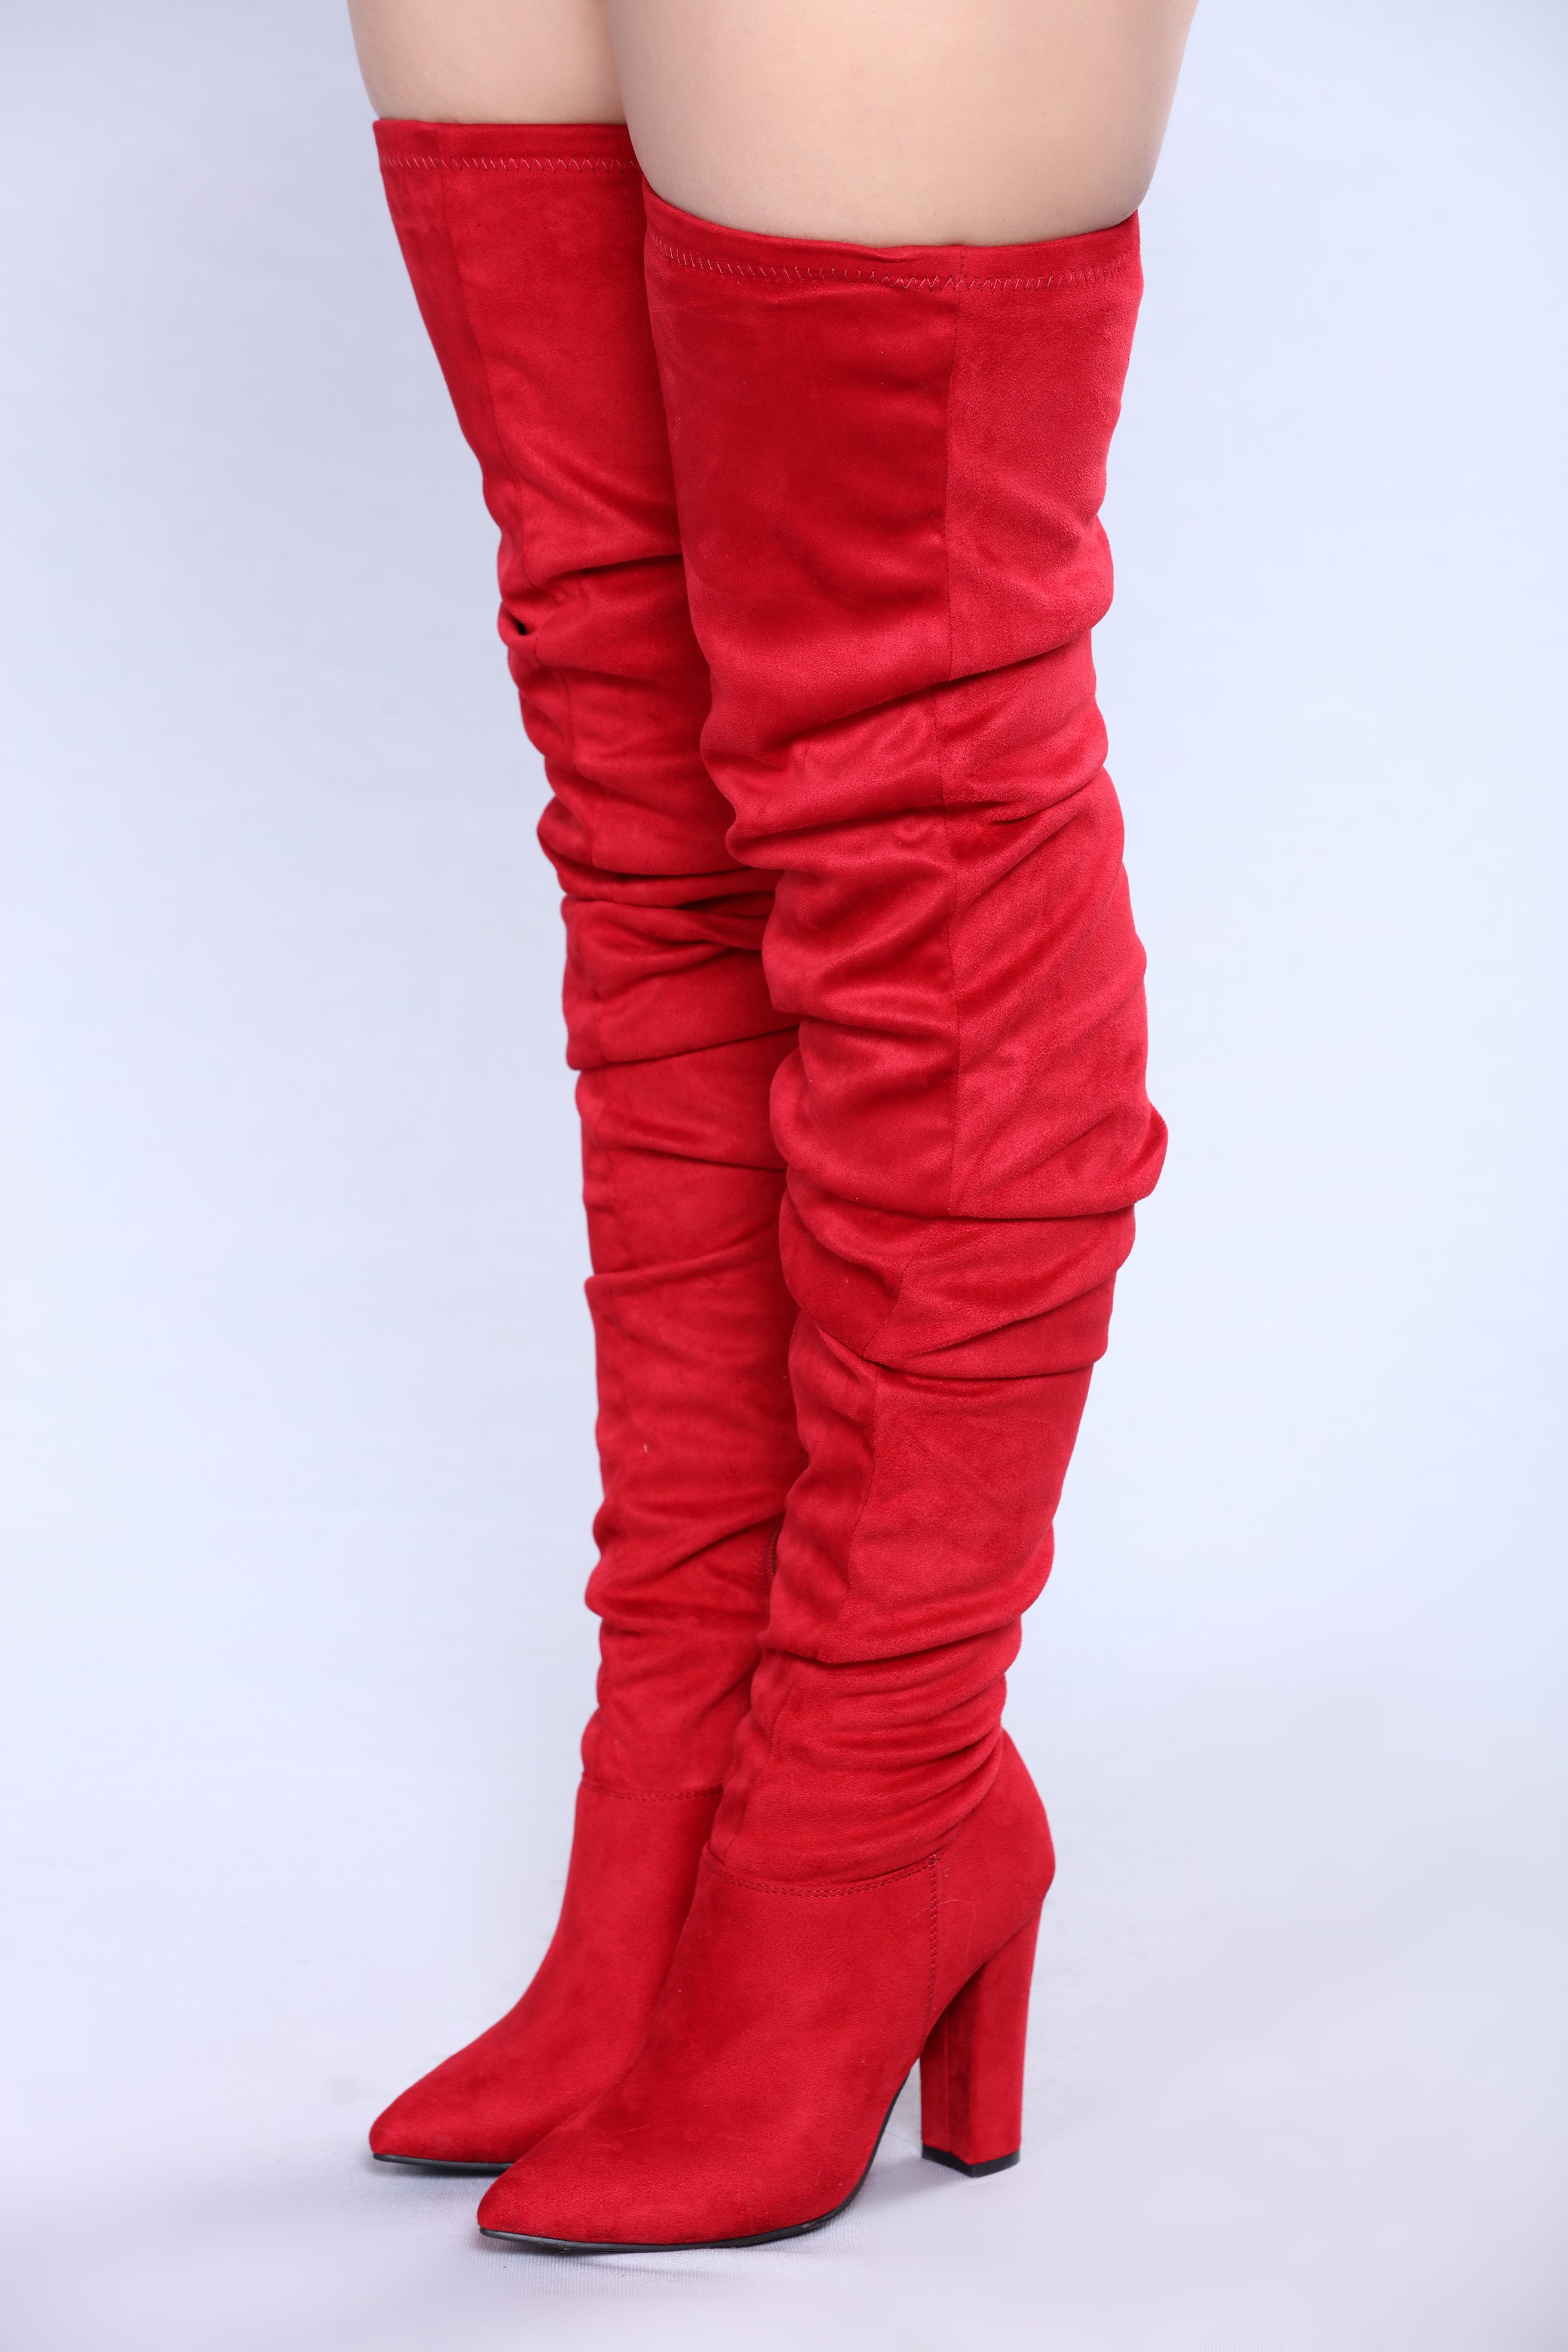 red boots fashion nova